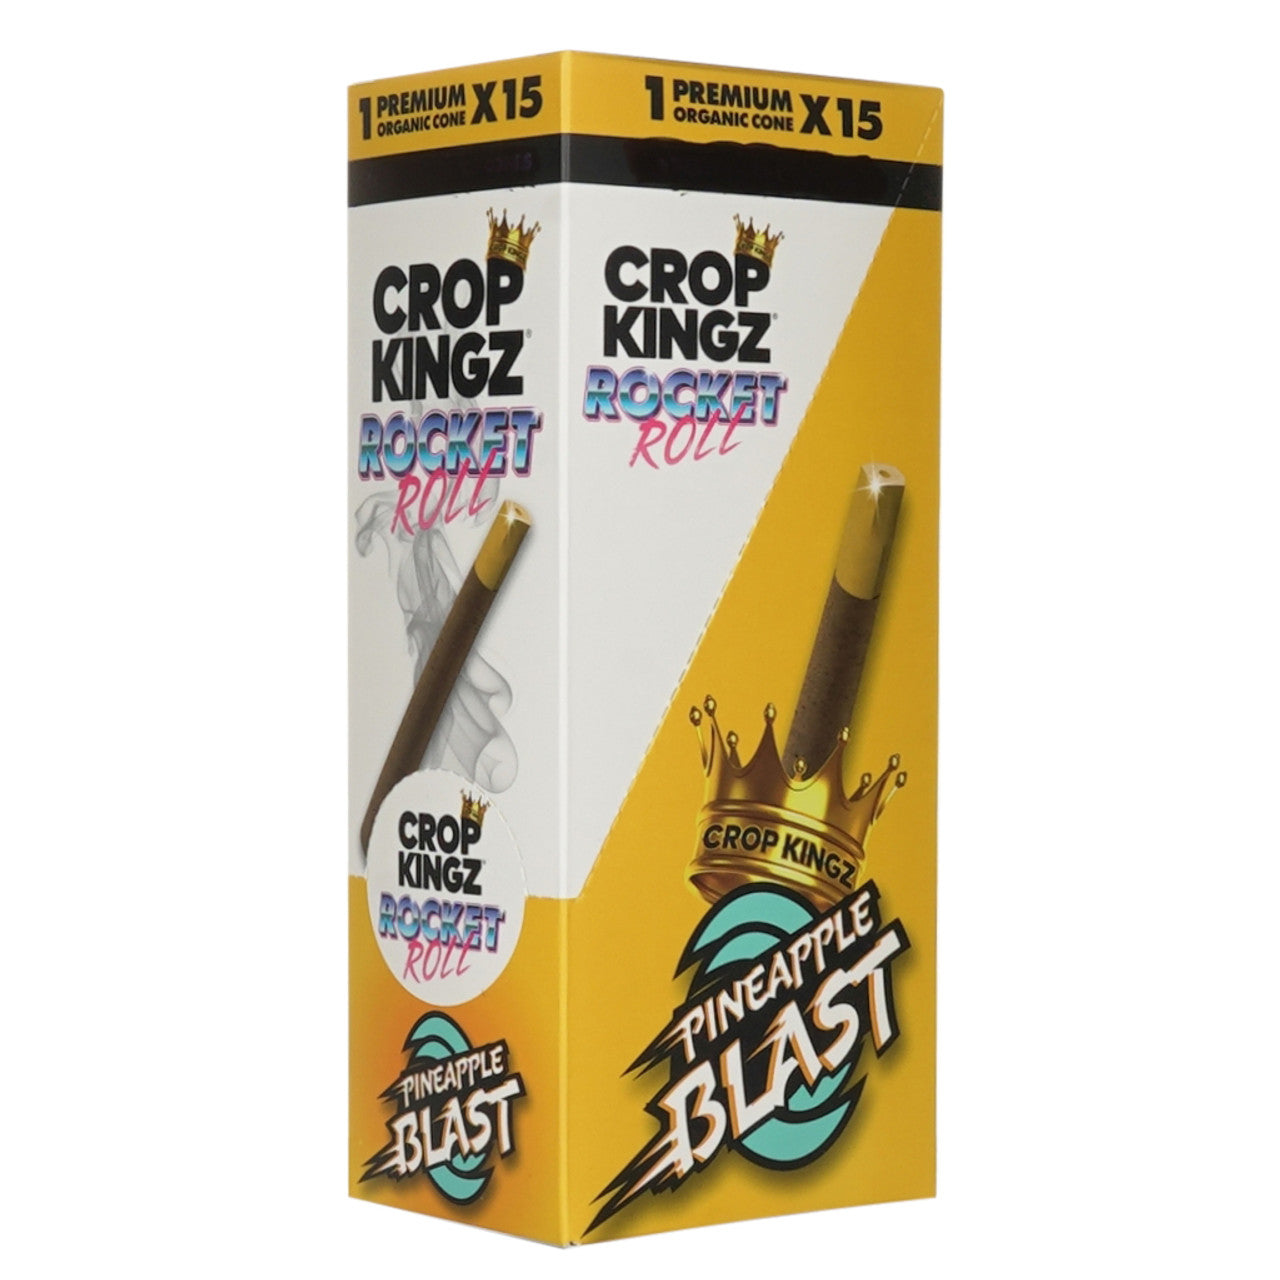 Crop Kingz Rocket Roll PineappleBlast MP